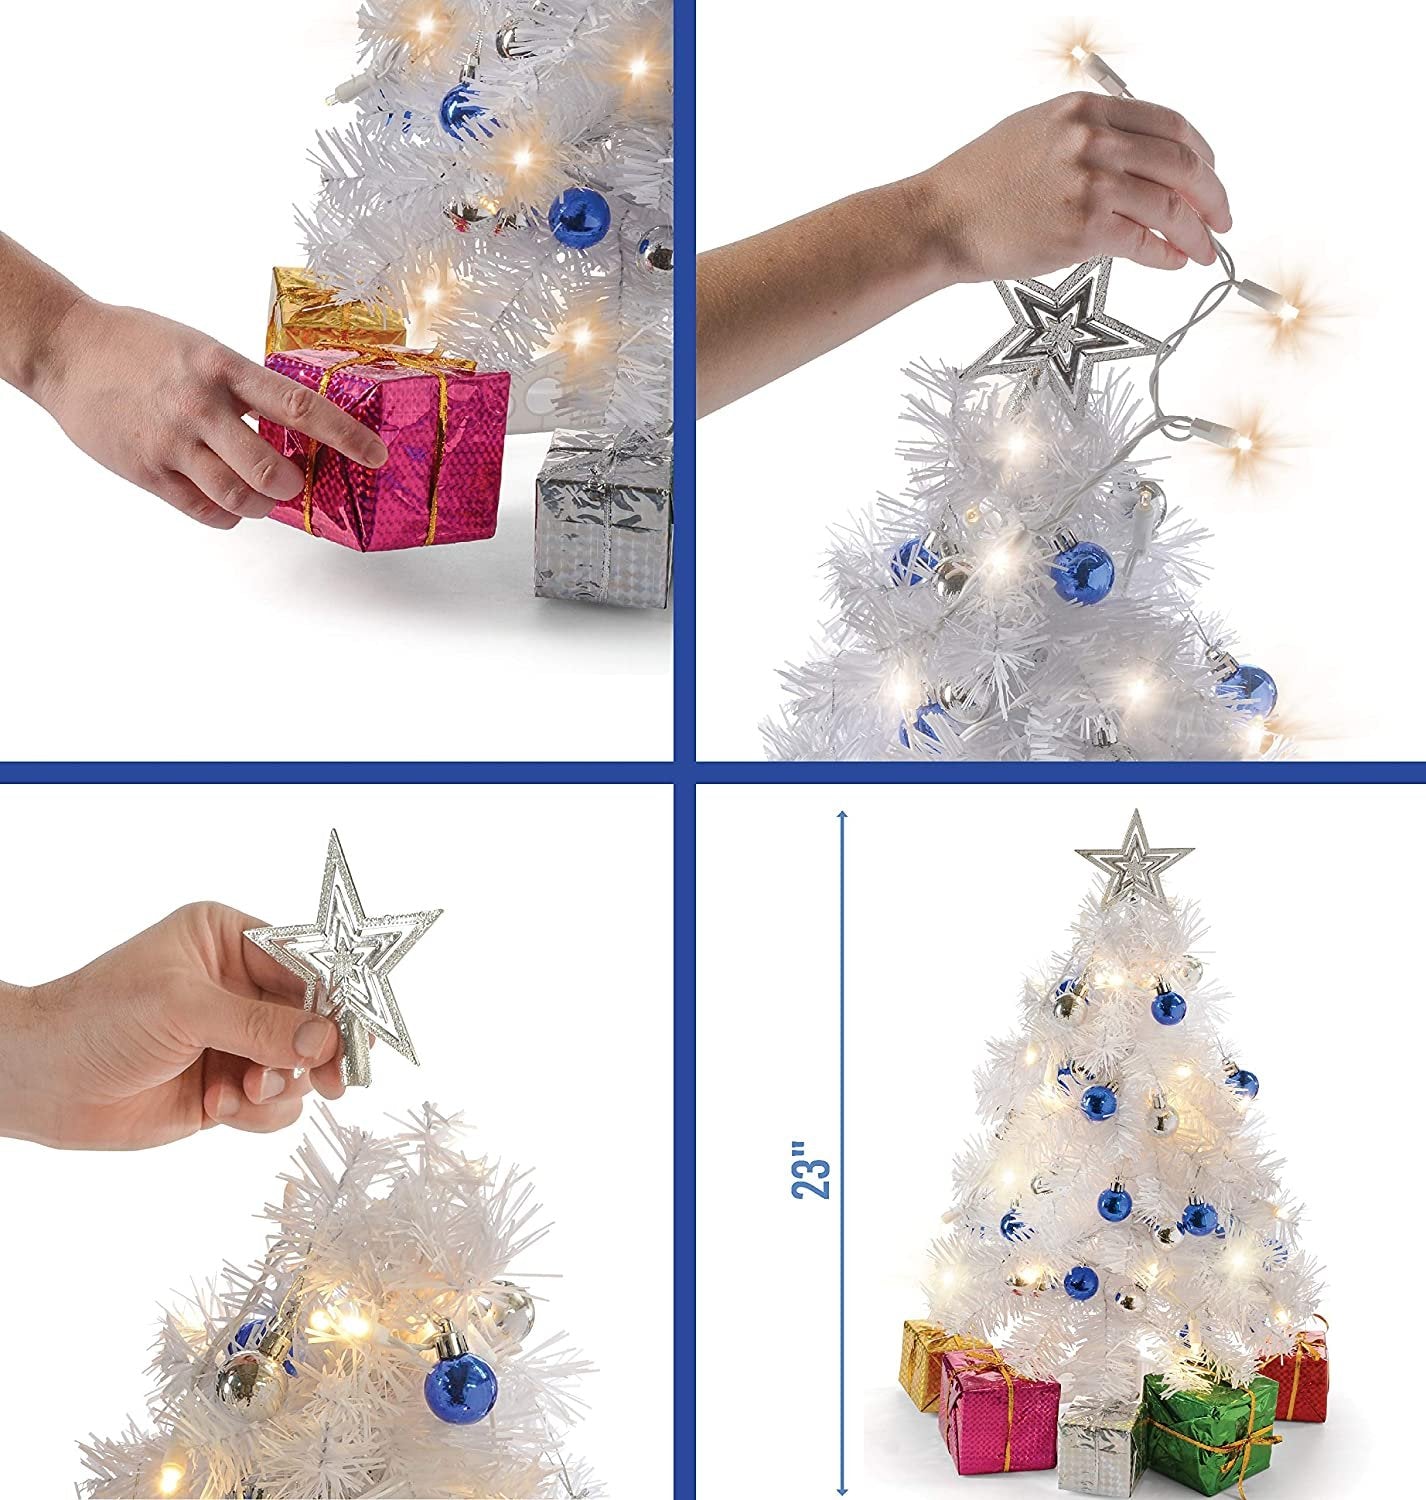 23 Mini White Christmas Tree w/ LED Lights - DIY Tabletop w/ Star Treetop & Hanging Ornaments